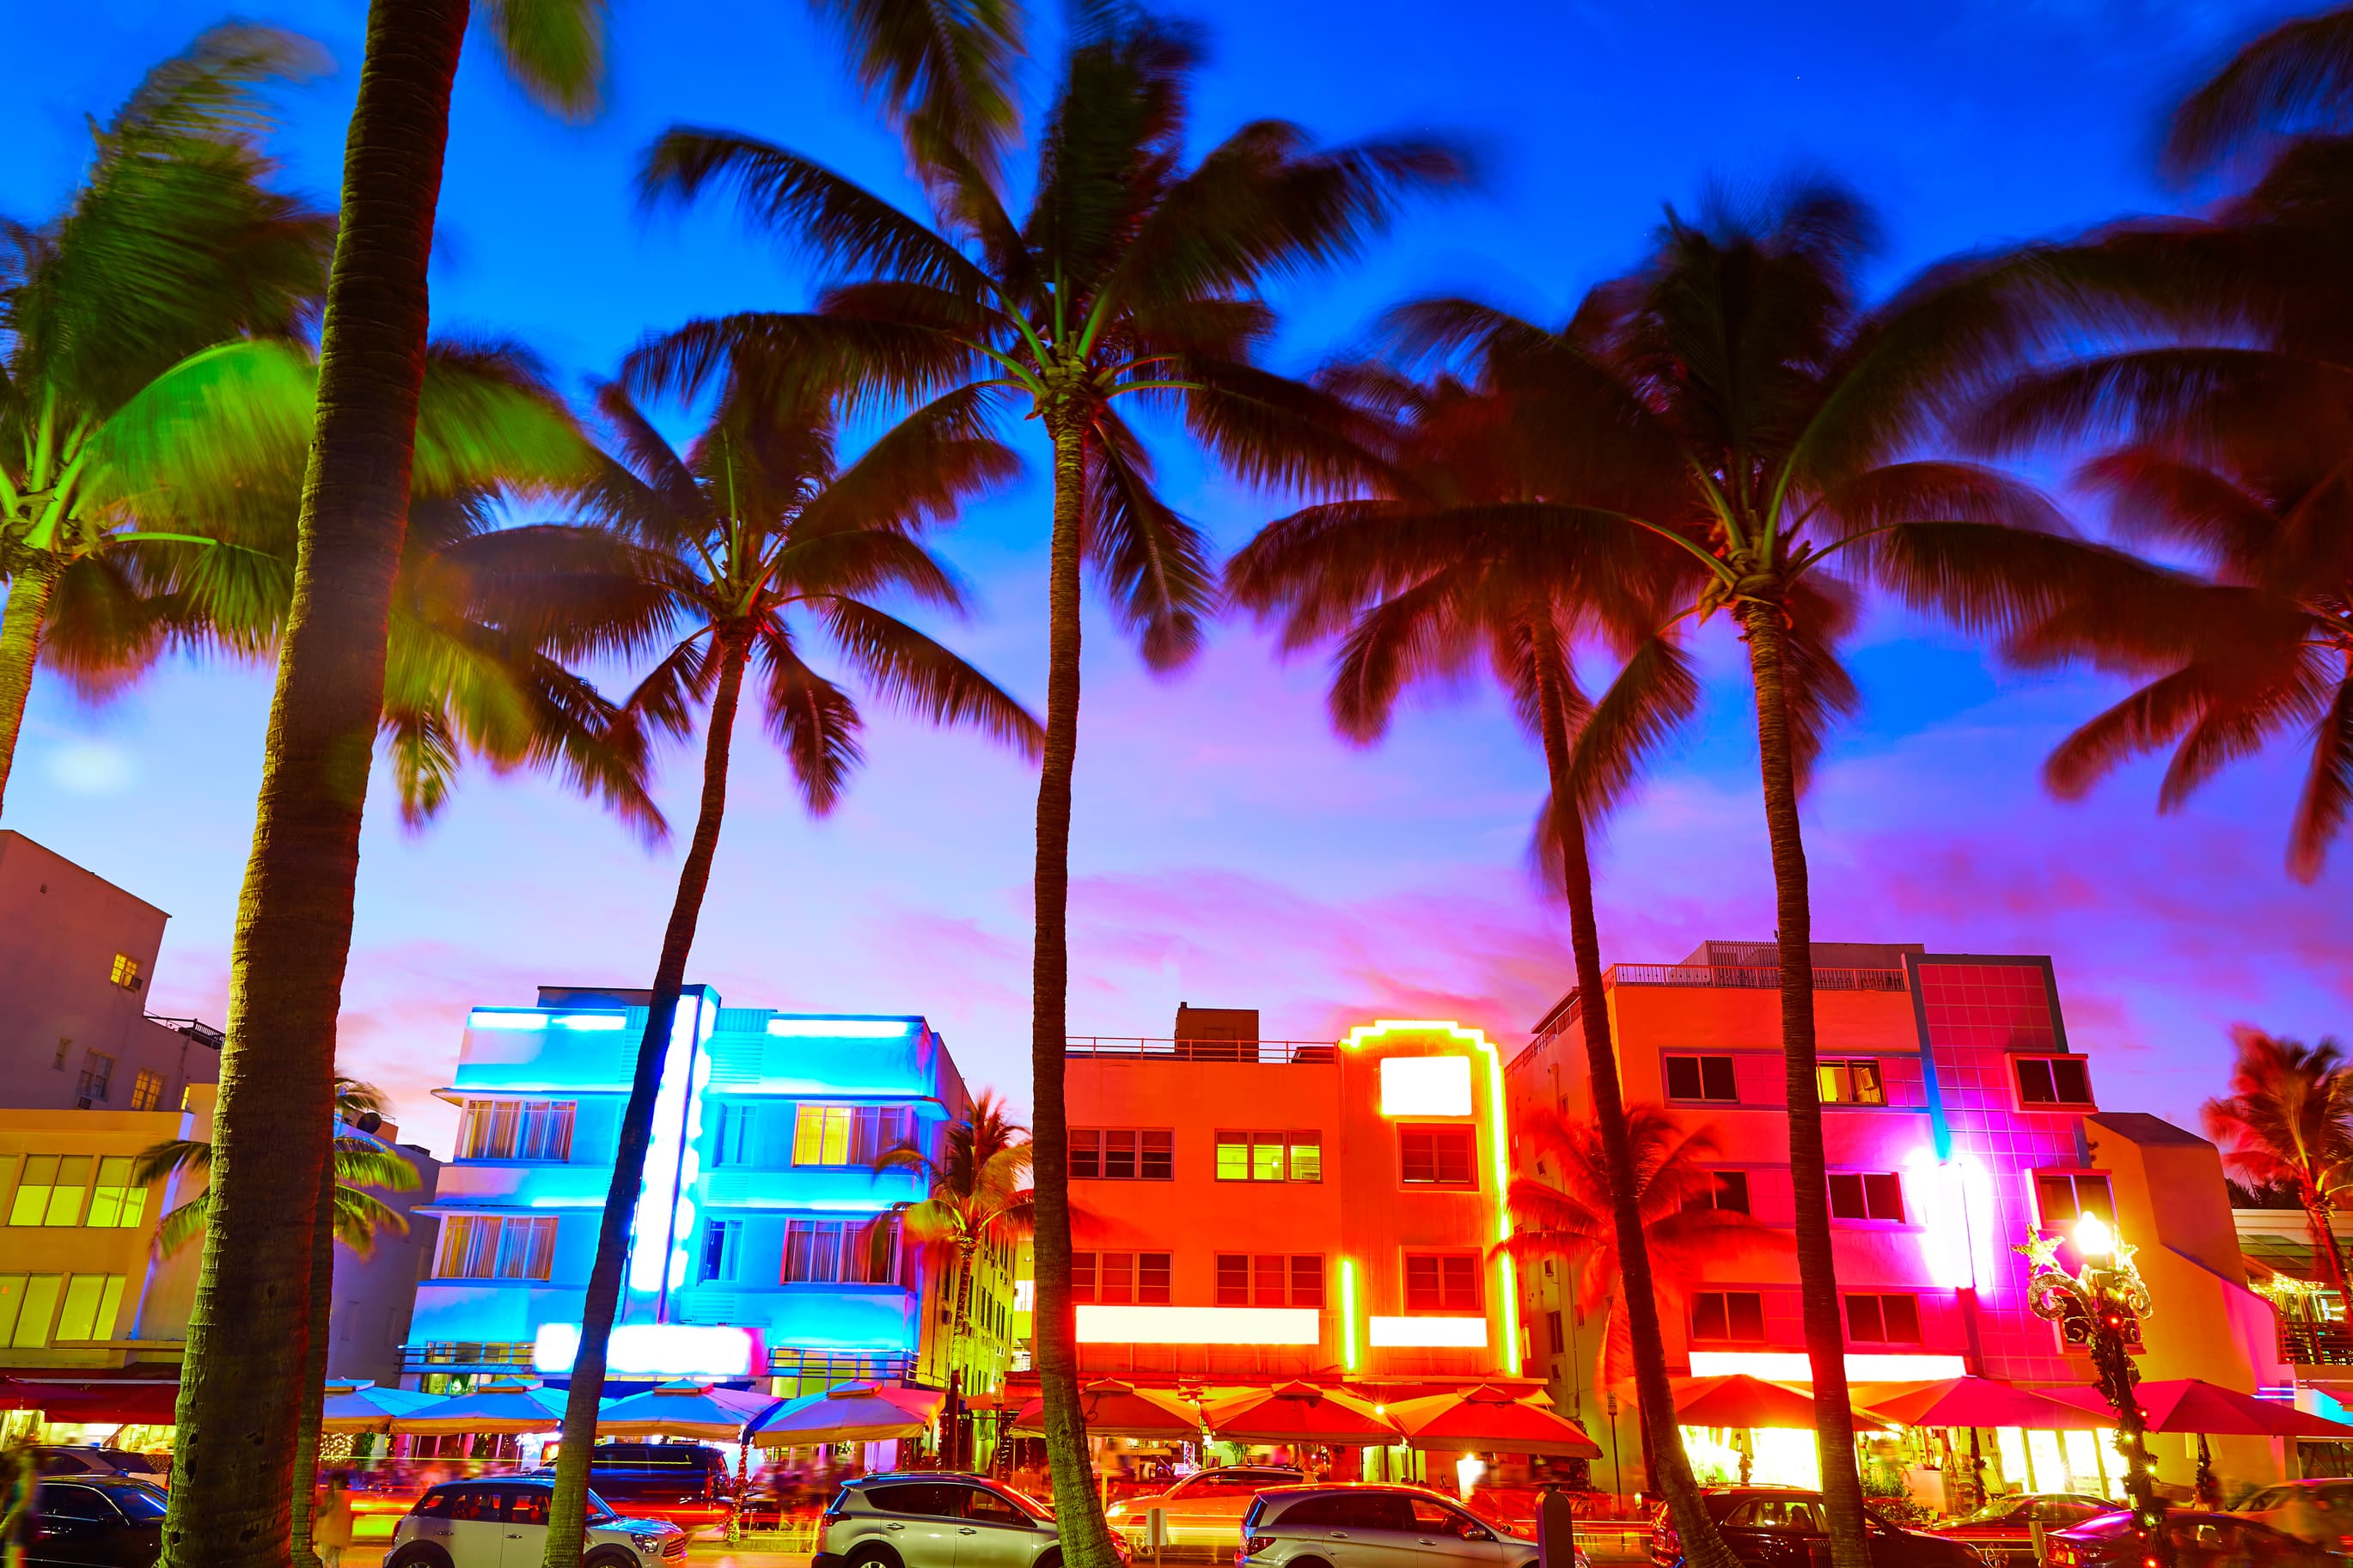 Colorful buildings along Miami Beach